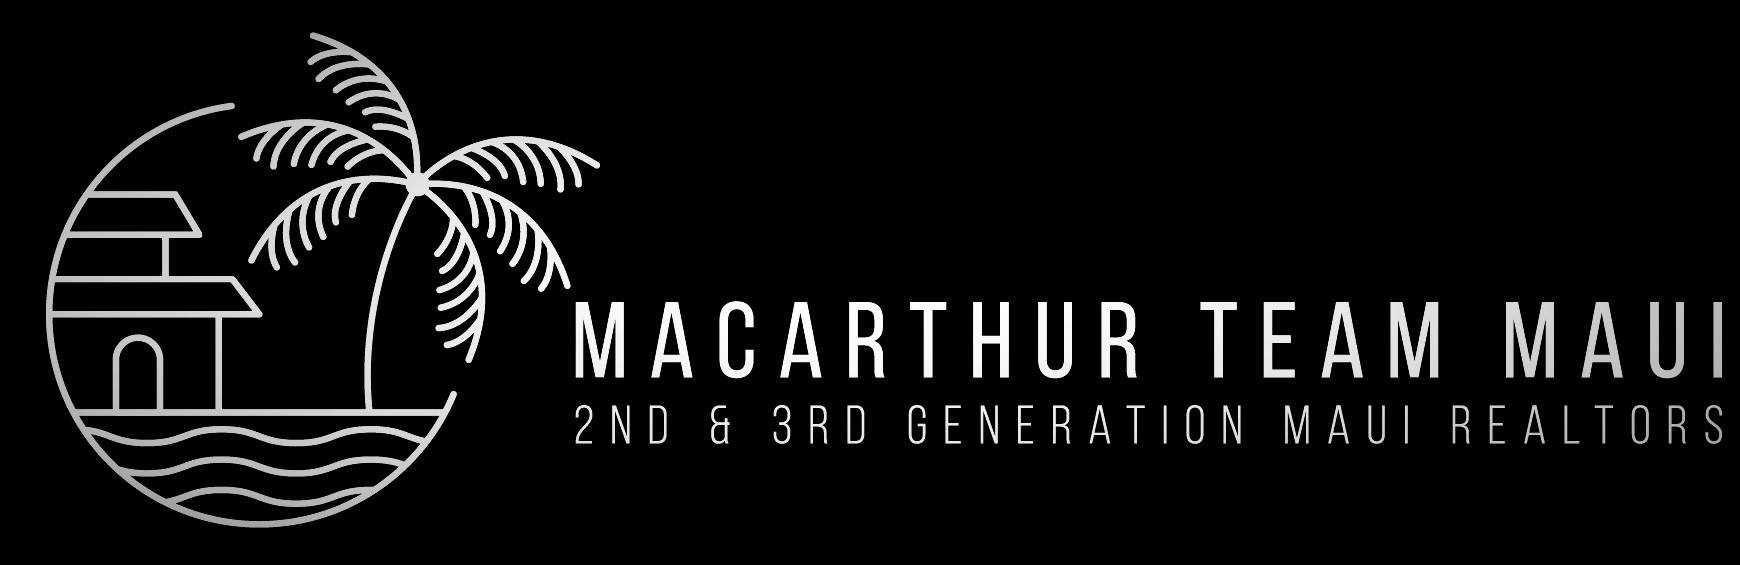 macarthur team maui logo